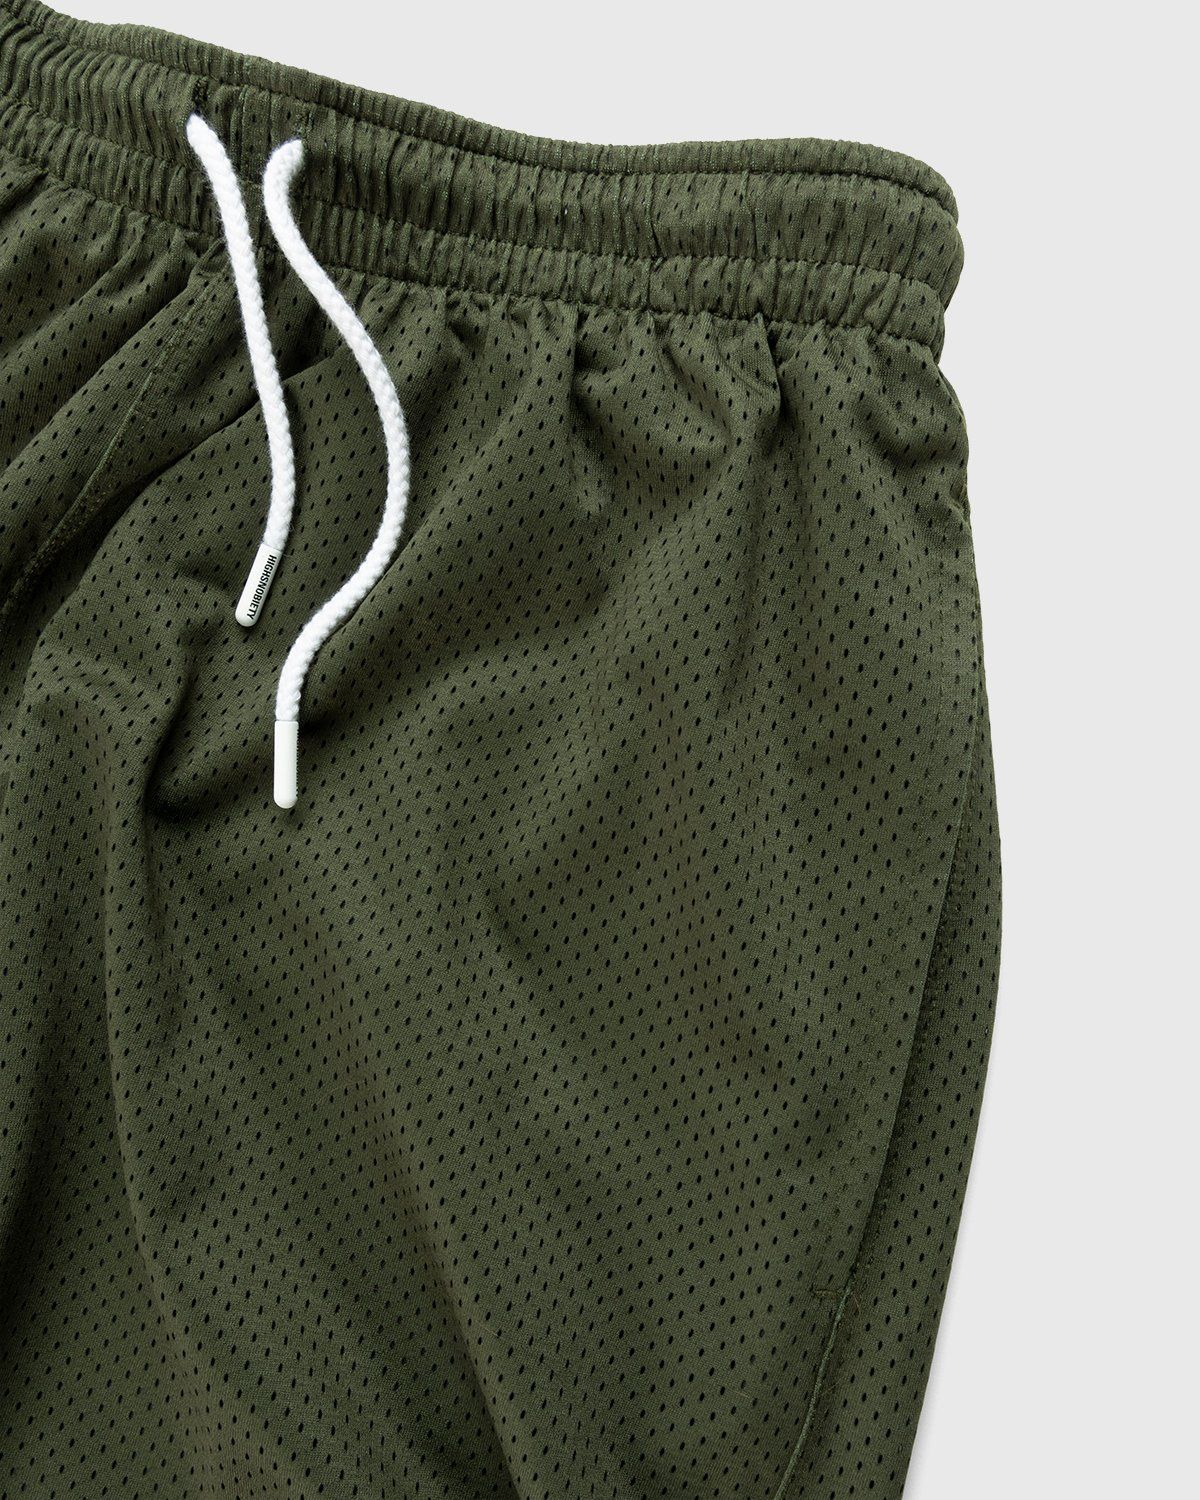 Highsnobiety – HS Sports Reversible Mesh Shorts Black/Khaki - Short Cuts - Green - Image 7